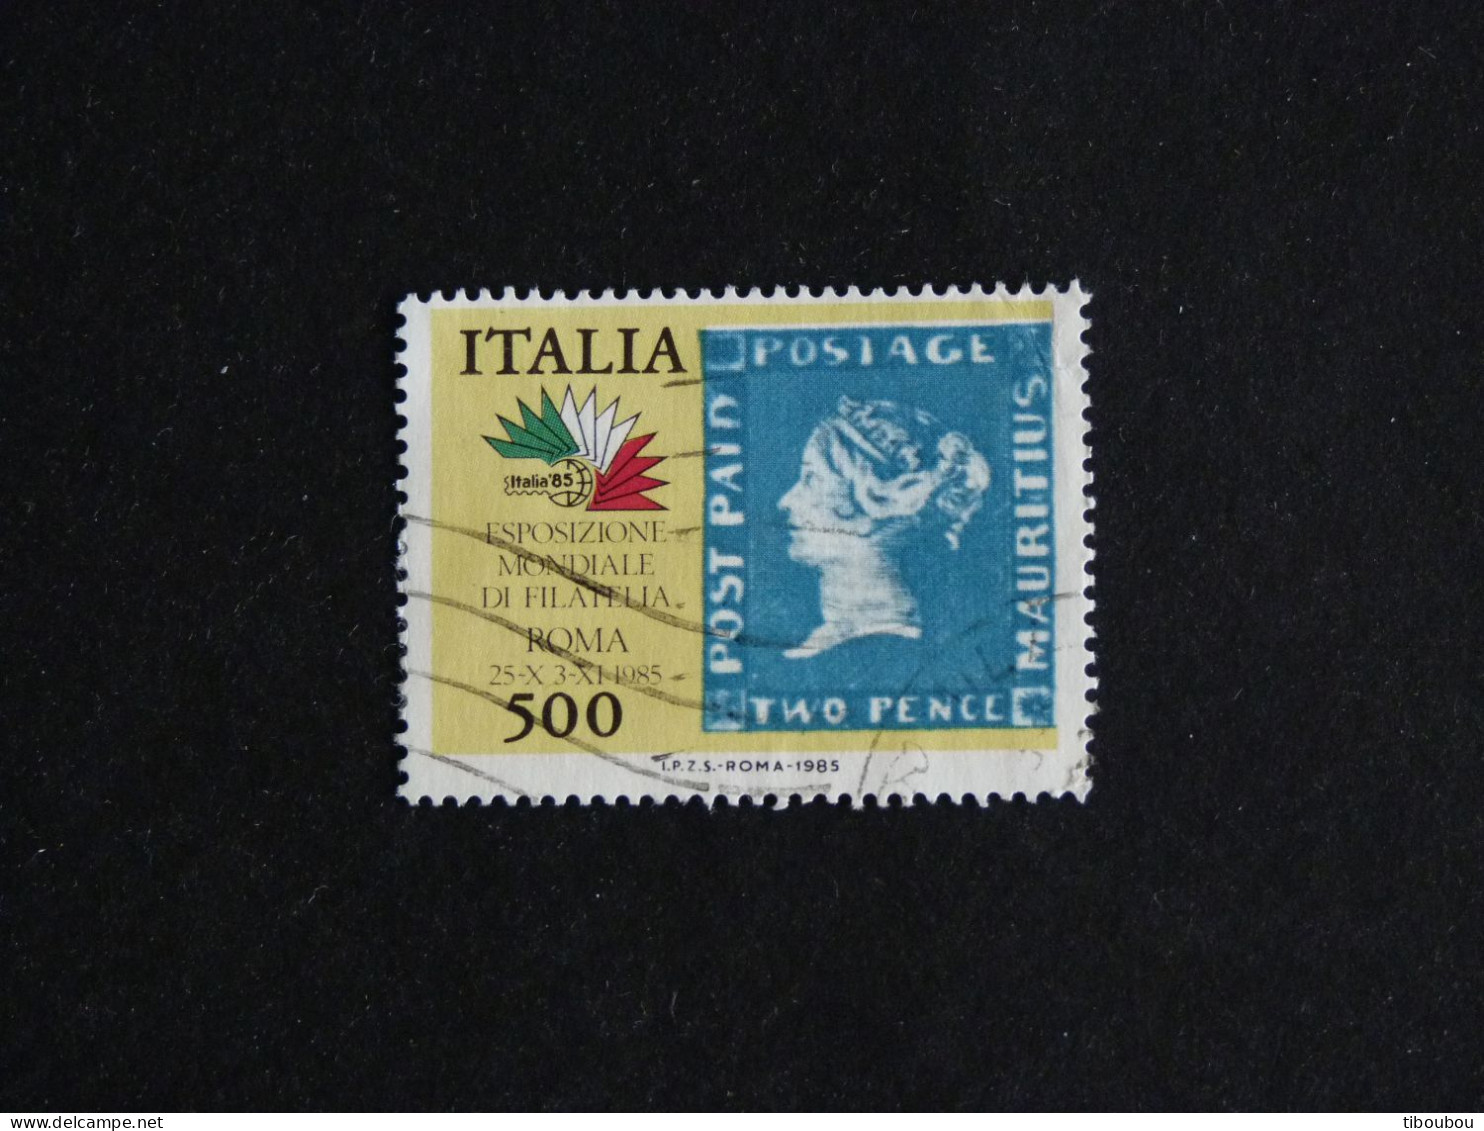 ITALIE ITALIA YT 1690 OBLITERE - ITALIA 85 EXPOSITION PHILATELIQUE TIMBRE SUR TIMBRE - 1981-90: Usati